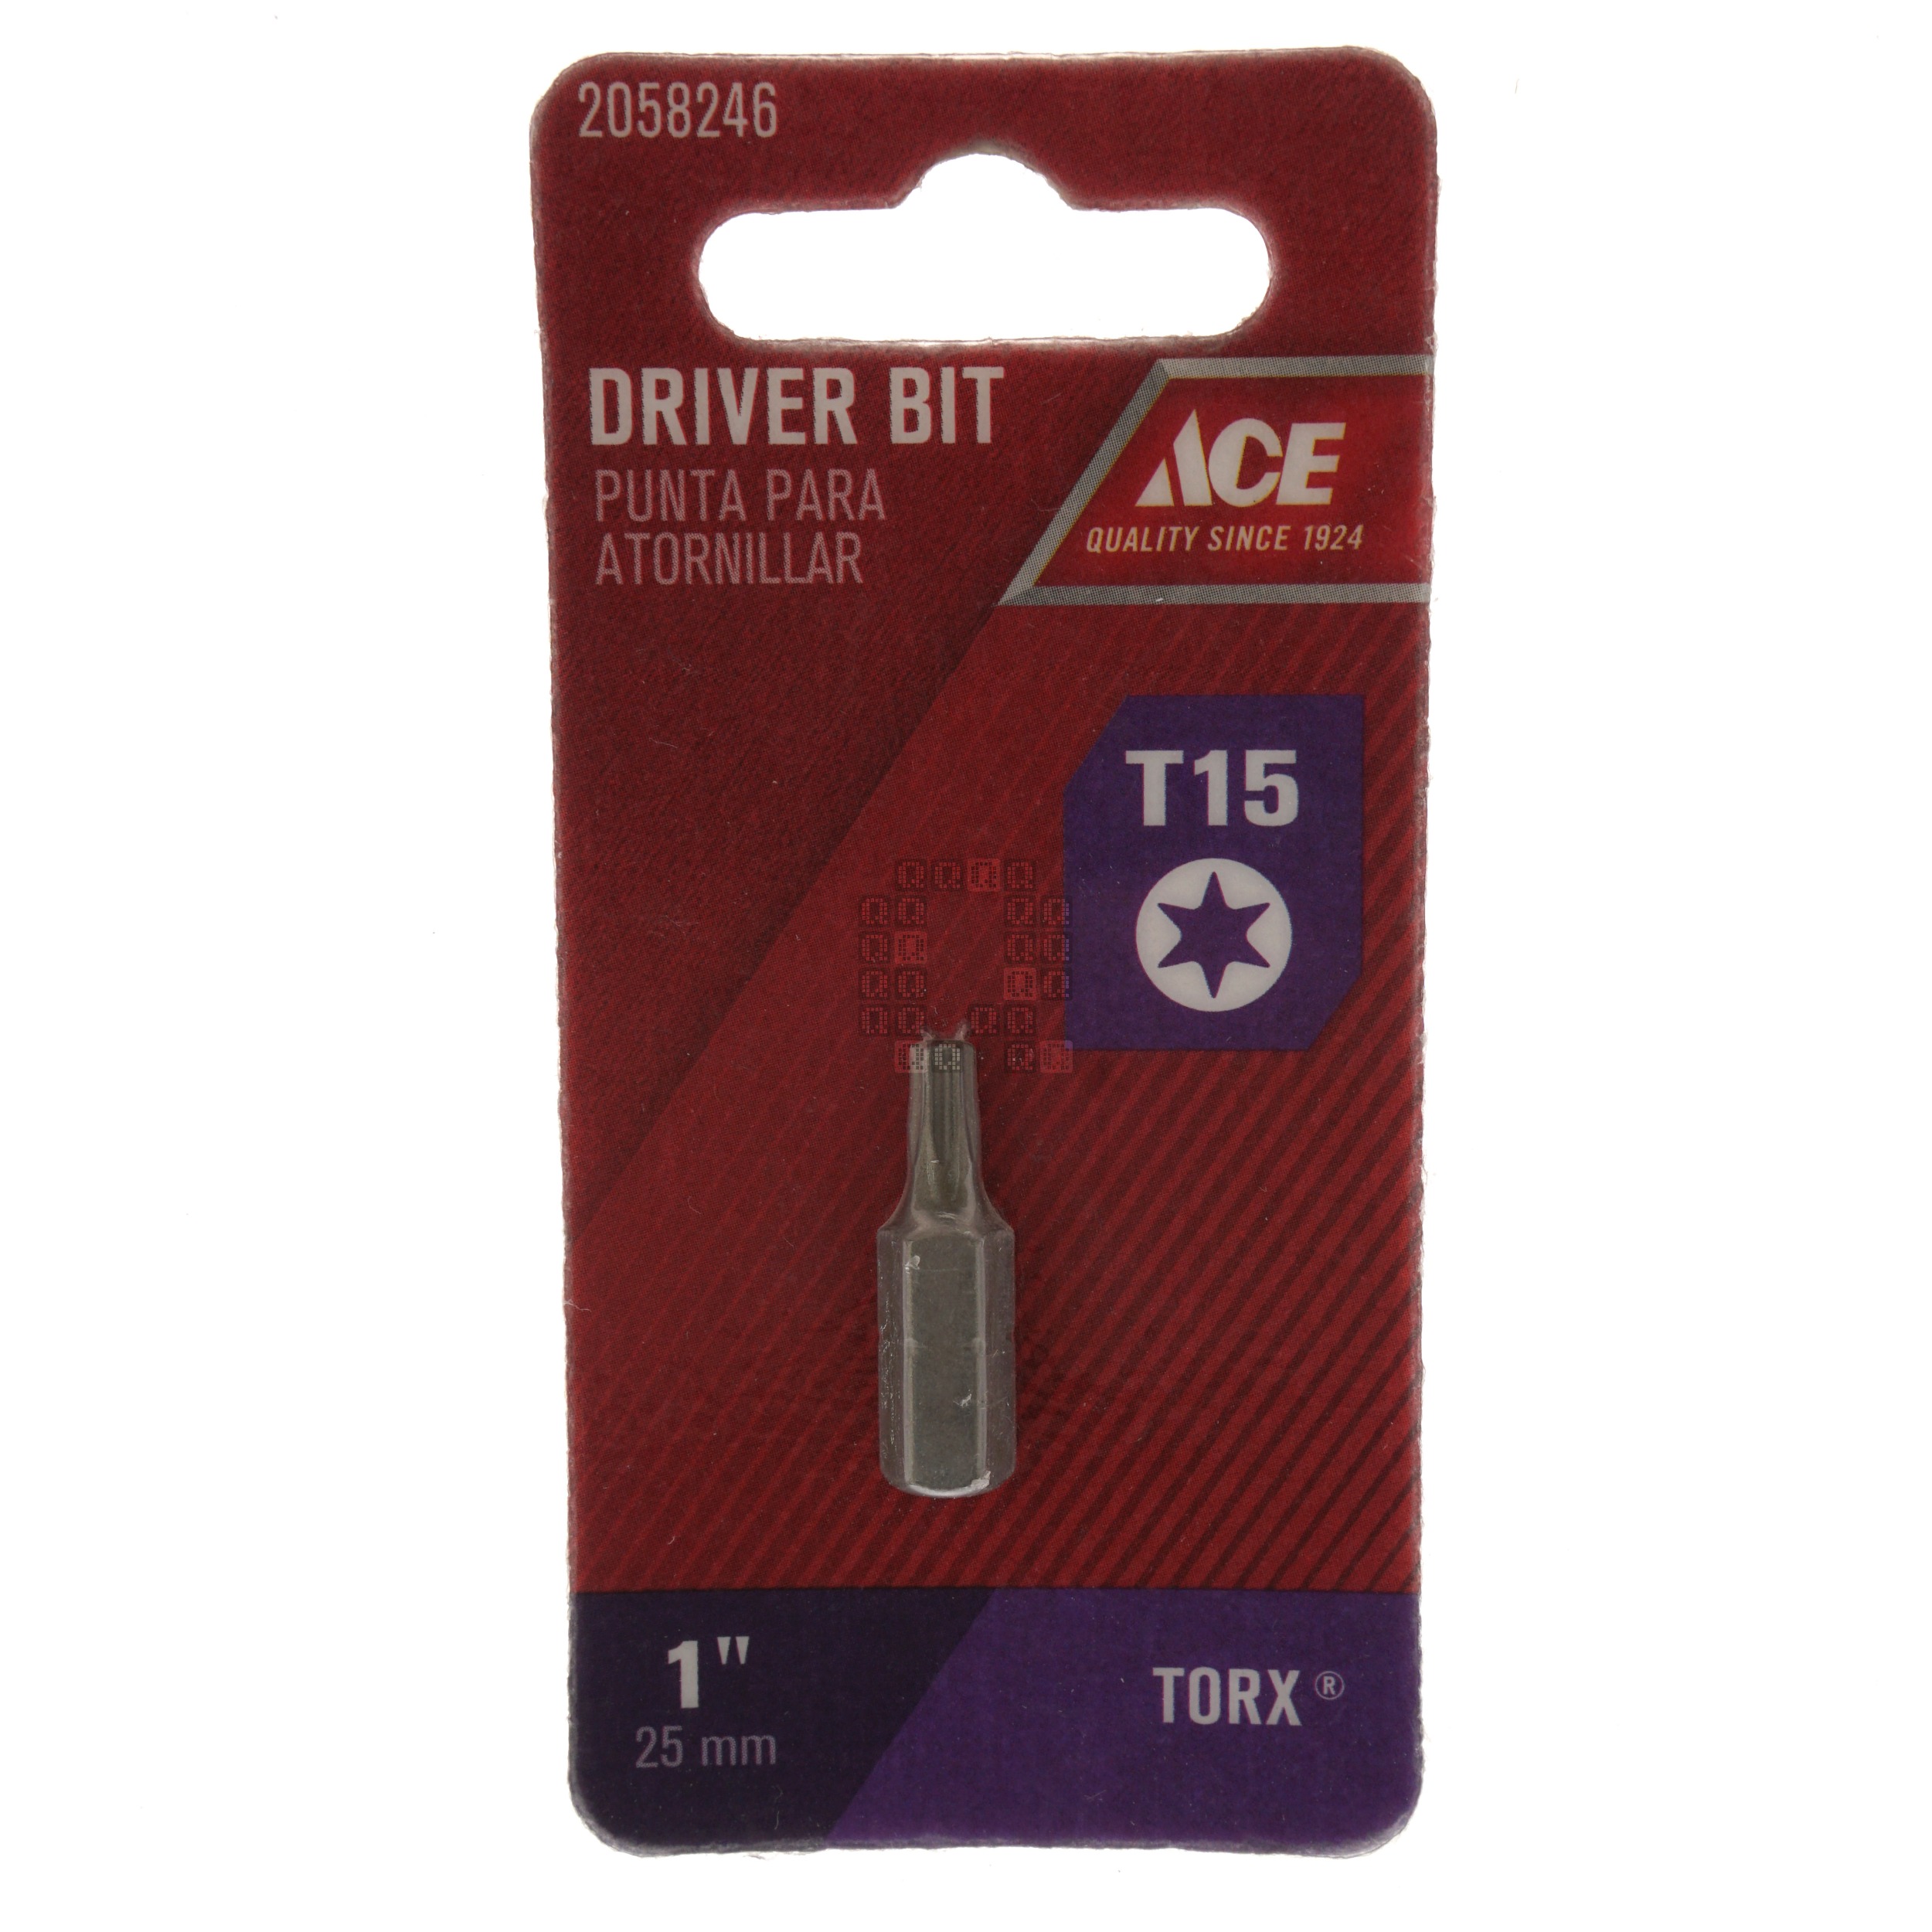 ACE Hardware 2058246 T15 TORX Driver Bit, 1" Length, 1/4" Hex Drive